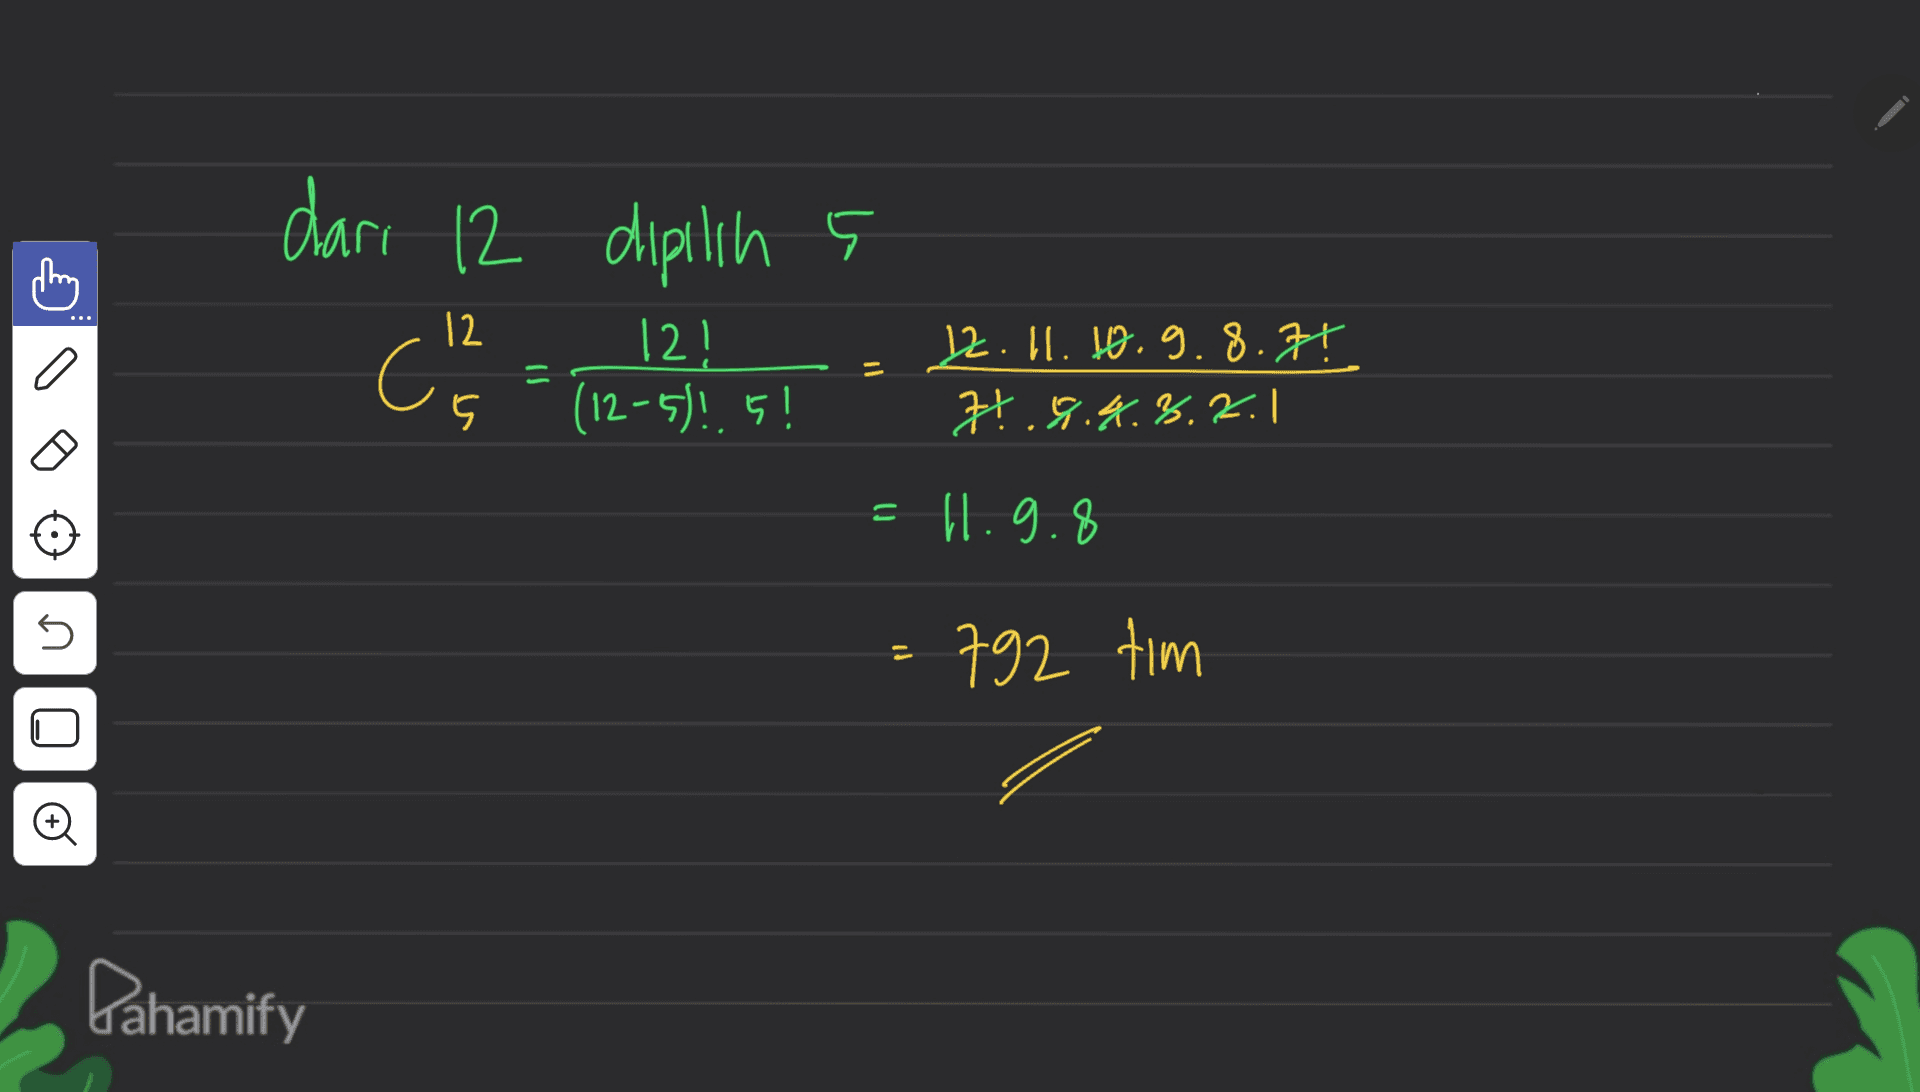 dari 12 dipilih s 12 C"= .5 Ci = 12! (12-5)!. 5! 12. 11. 10.9.8.75 74.8.8.8.2.1 5 U 11.9.8 U 792 tim Q0 Pahamify 